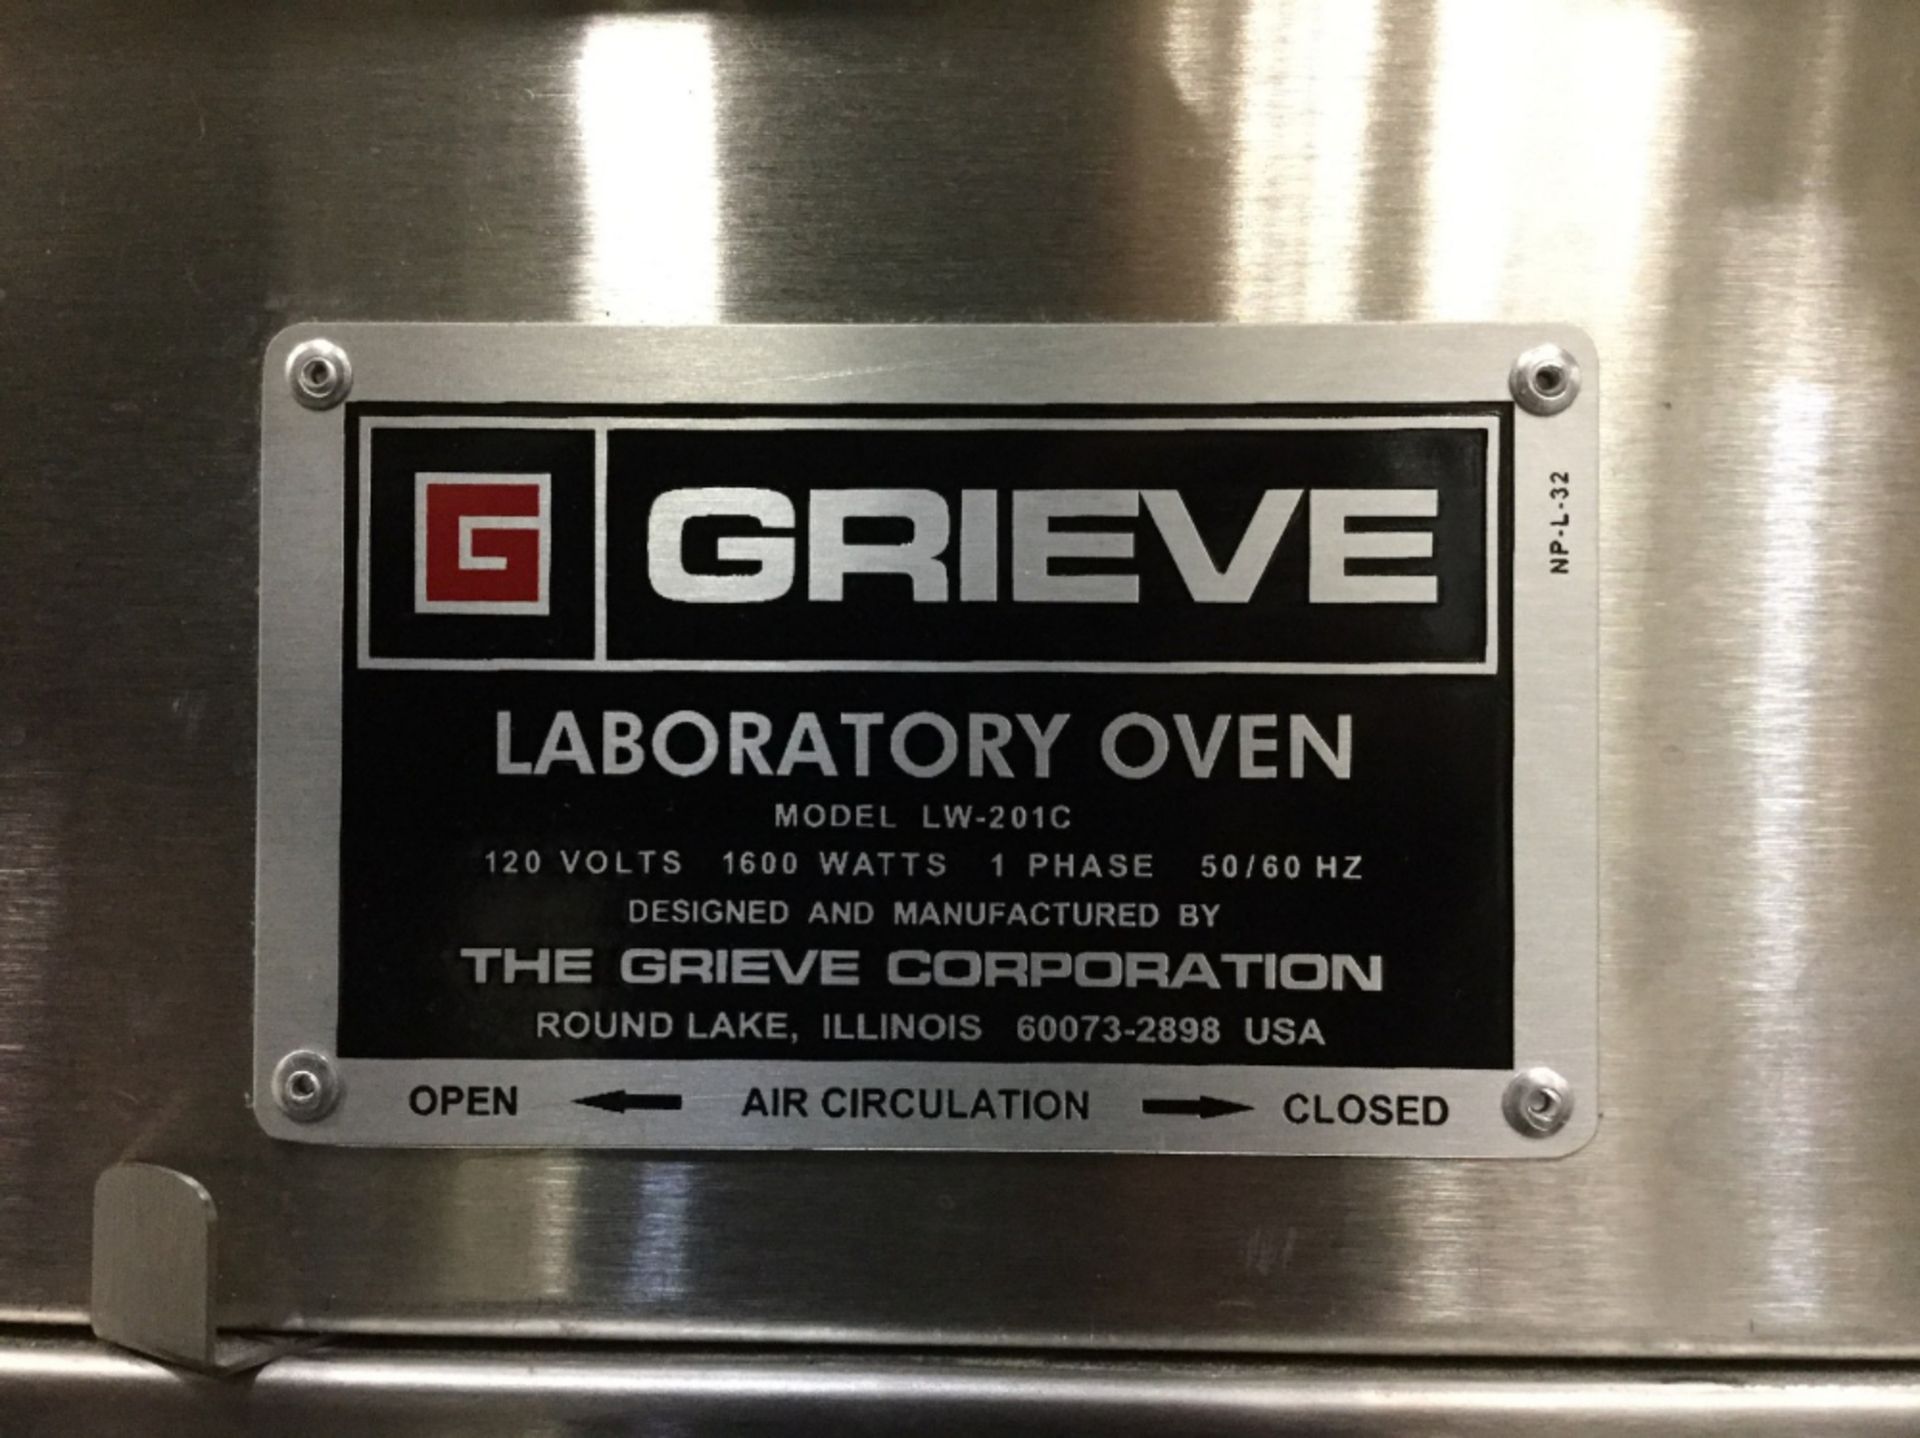 Grieve LW-201C Laboratory Oven - Image 4 of 4